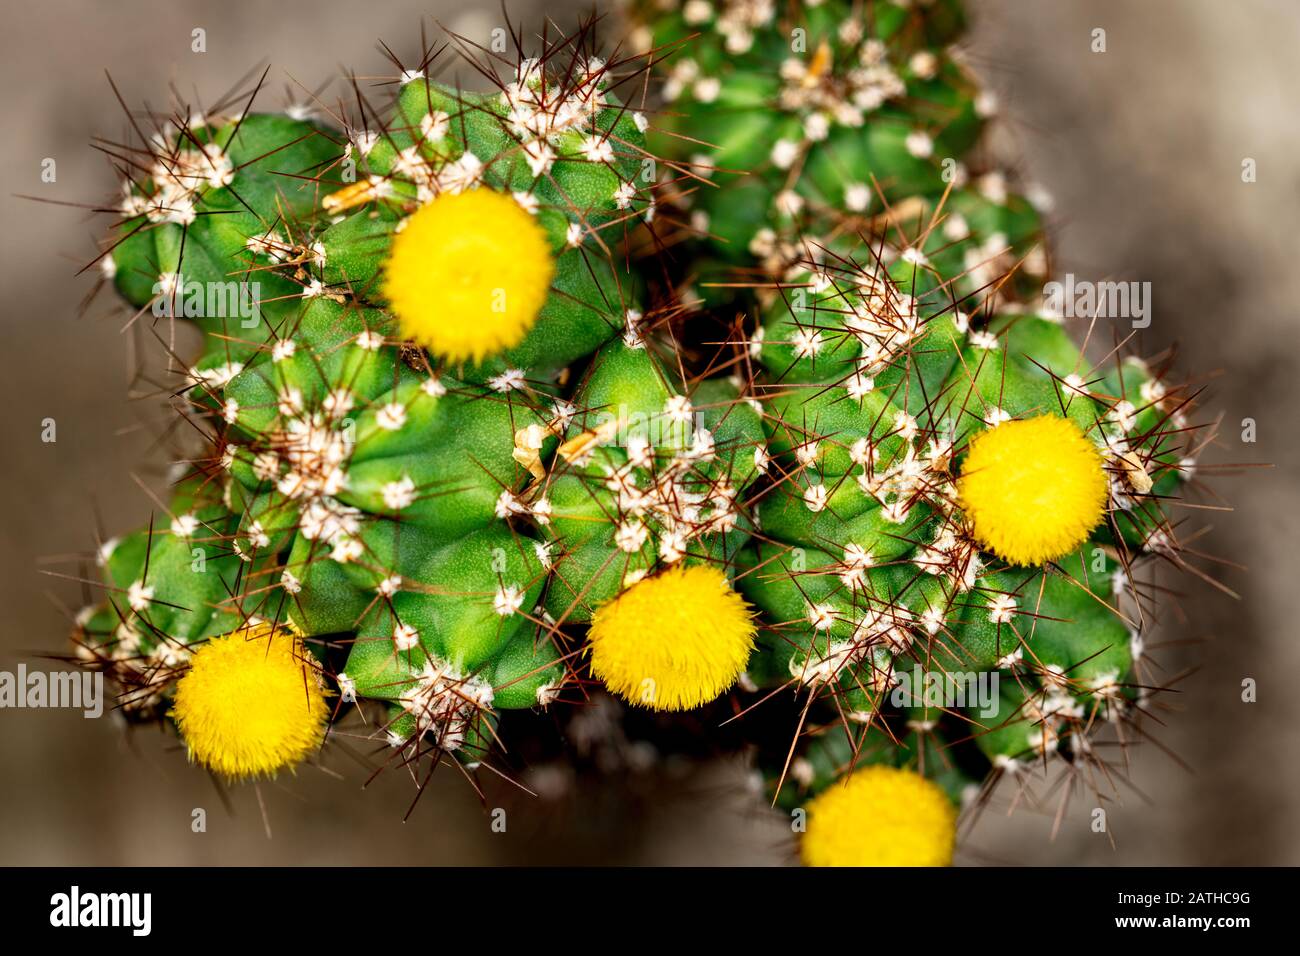 Topview of cactus Cereus Peruvianus Monstrosus with yellow blossoms, closeup, brown background Stock Photo